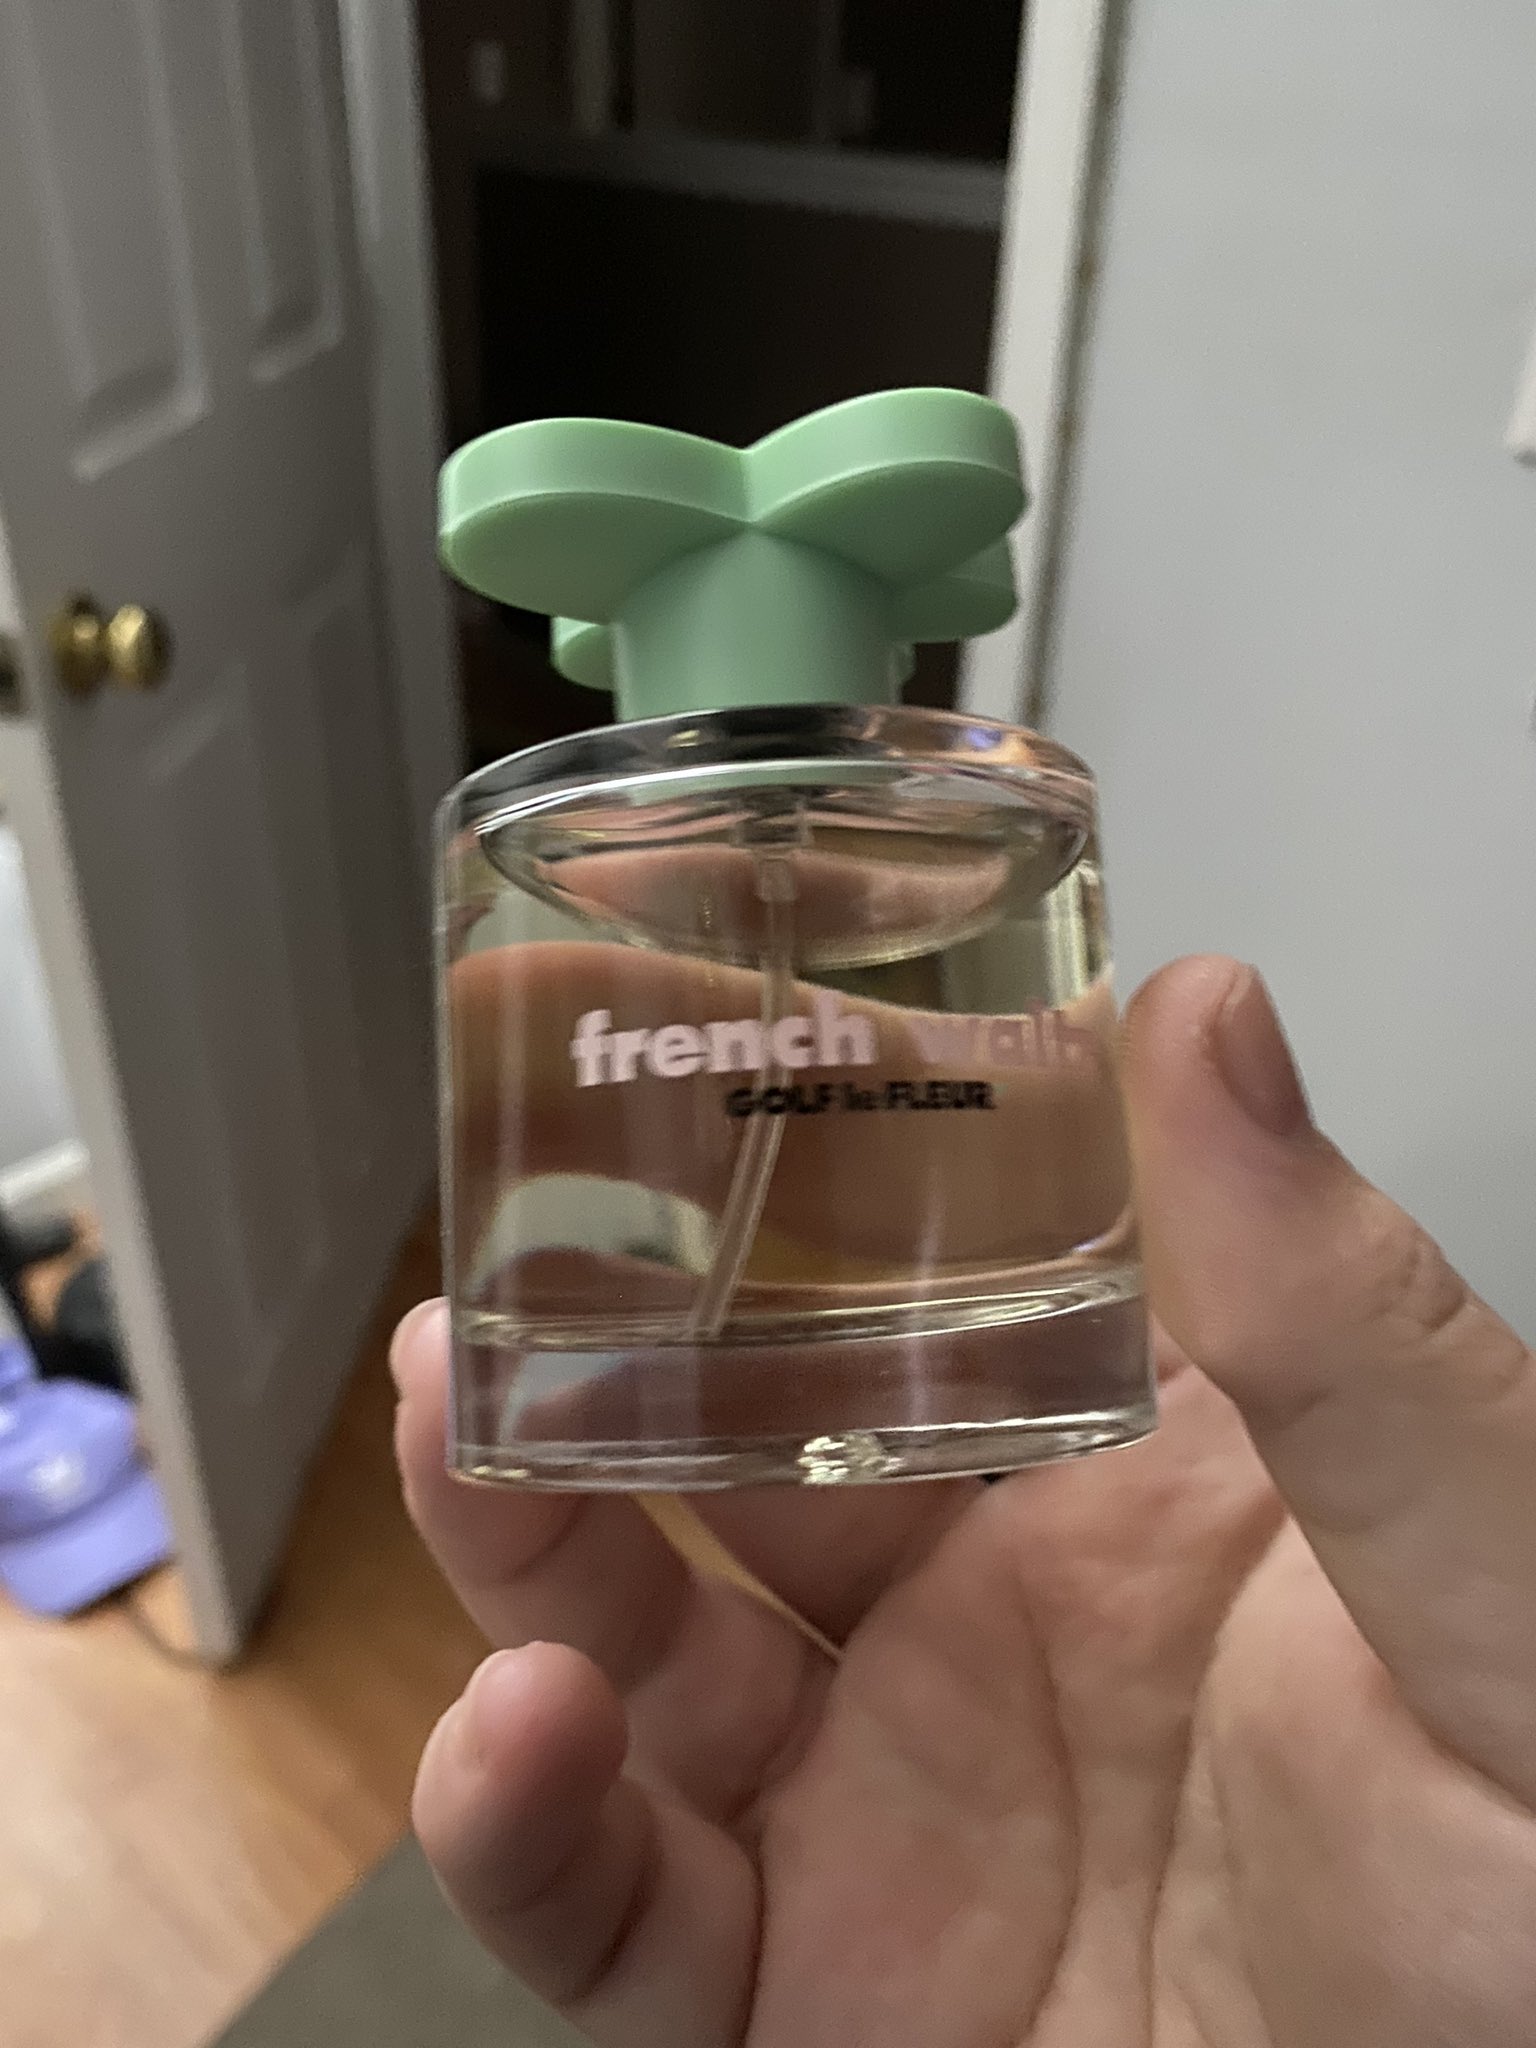 Tyler, the Fragrance Creator